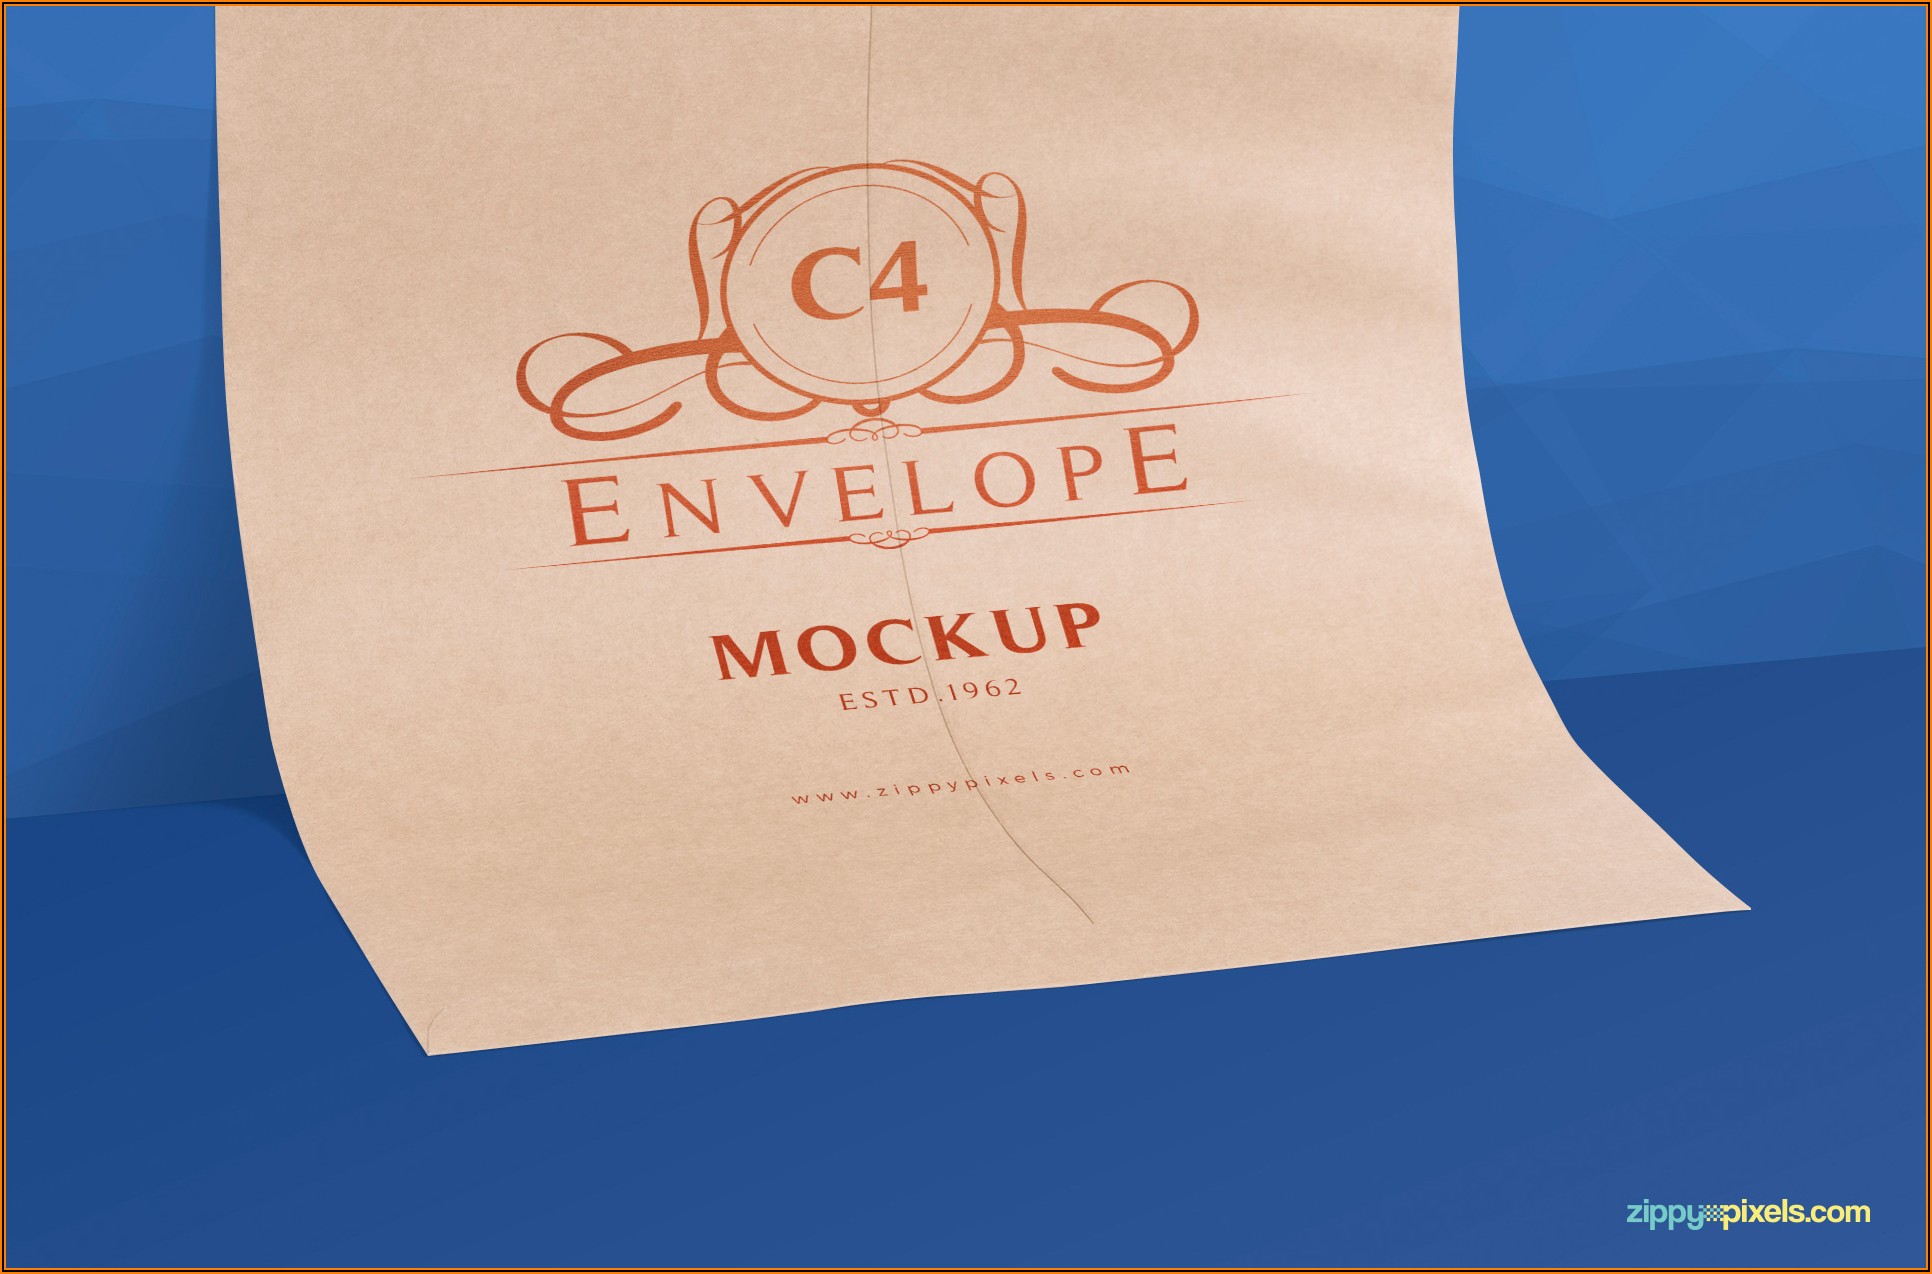 C4 Envelope Mockup Psd Free Download